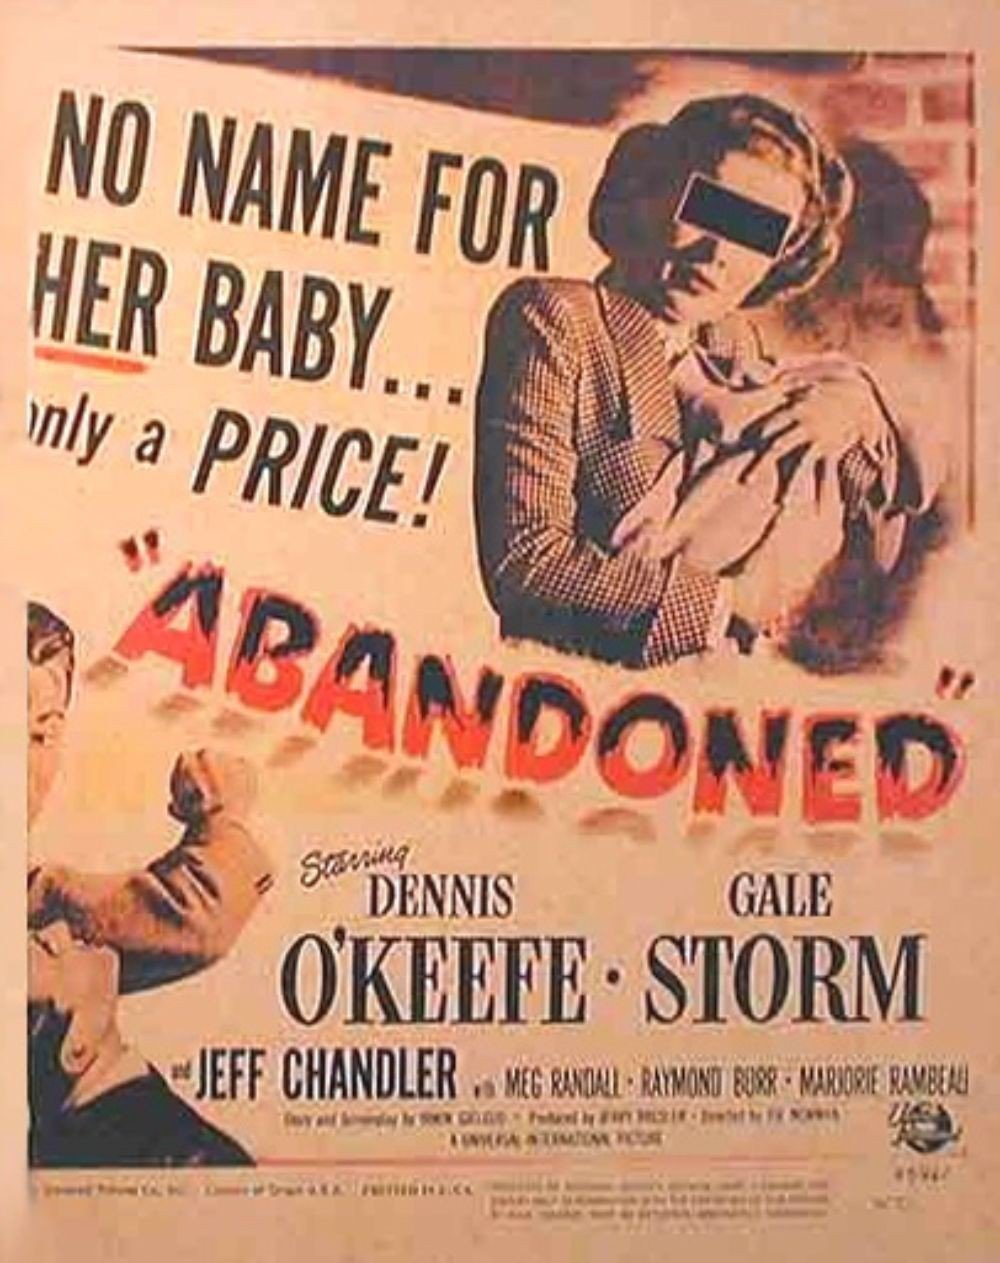 L'affiche du film Abandoned